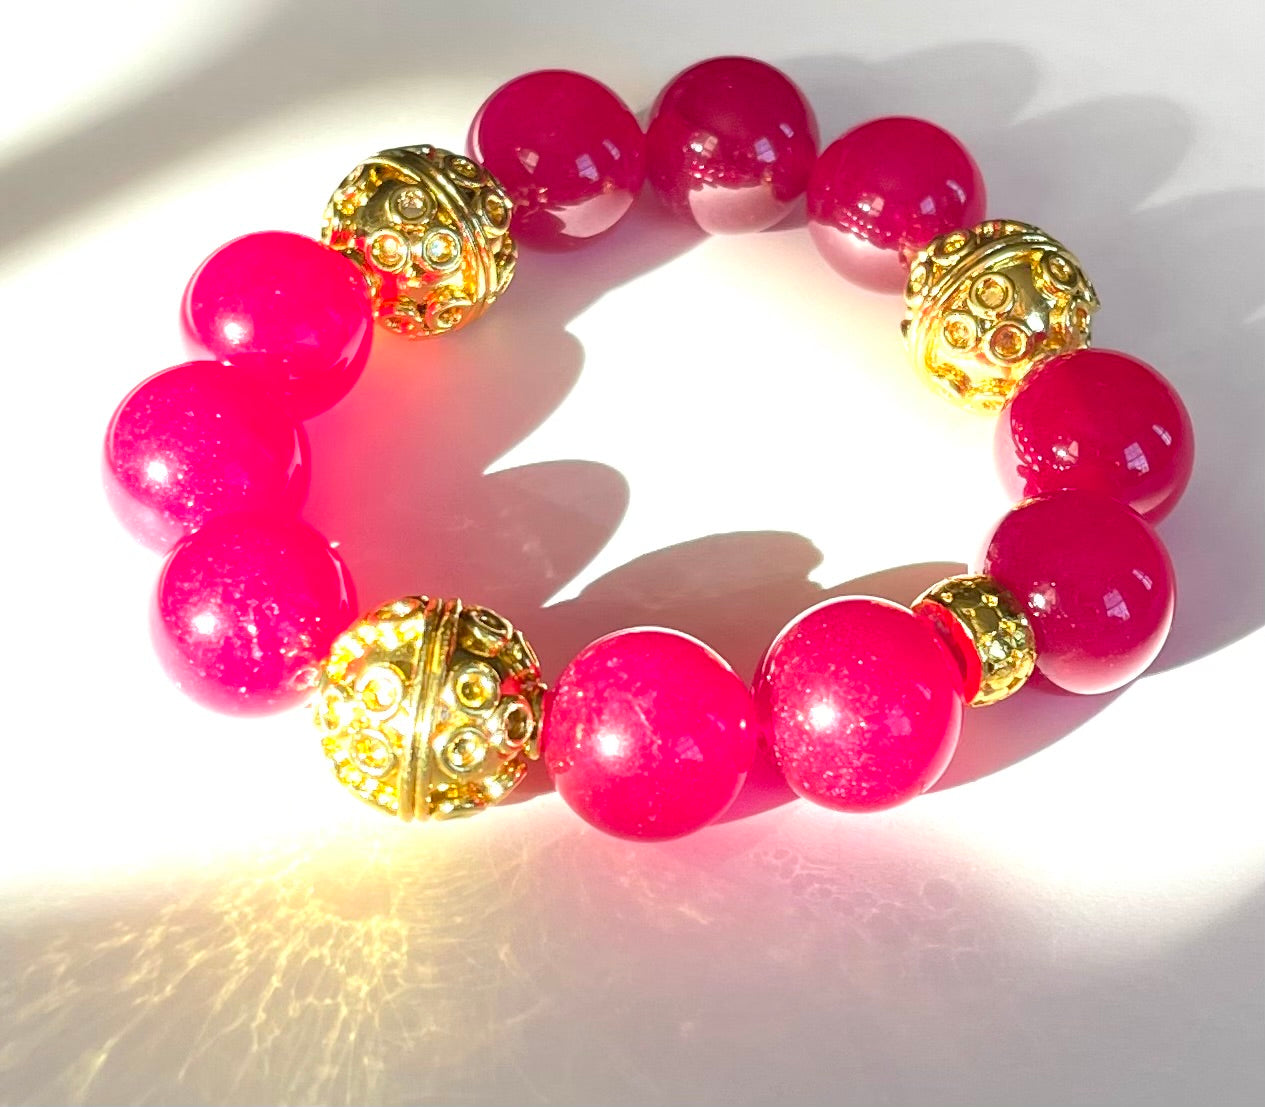 Rose Ruby Quartz Gemstones and Ornate Gold Bali Beaded Bracelet